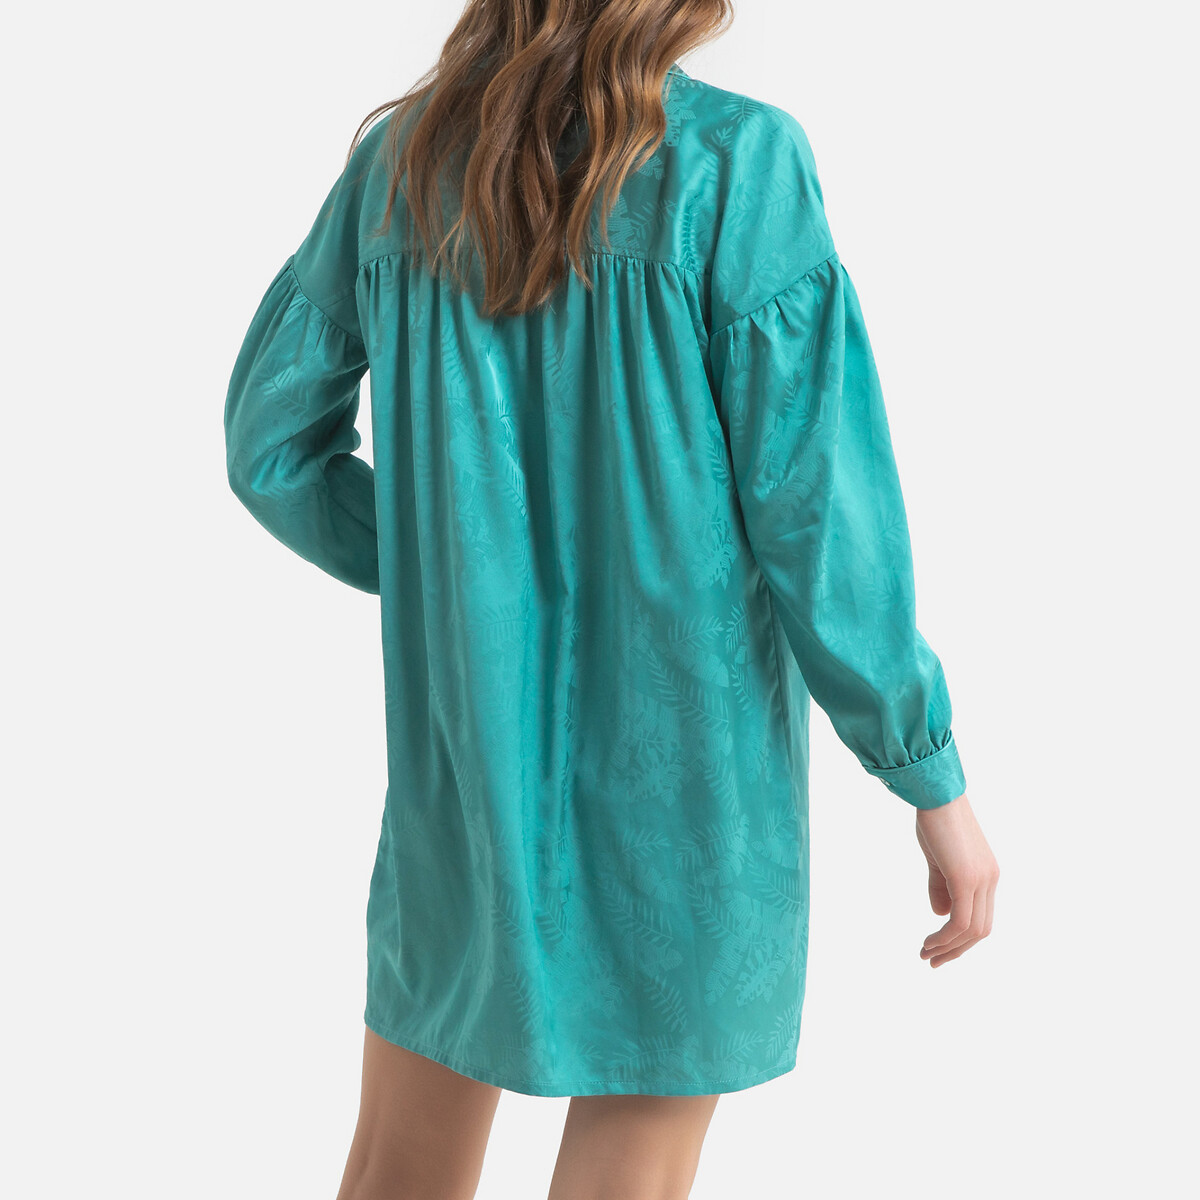 Ночная LaRedoute Рубашка в форме пижамы из сатина 44 (FR) - 50 (RUS) зеленый, размер 44 (FR) - 50 (RUS) Рубашка в форме пижамы из сатина 44 (FR) - 50 (RUS) зеленый - фото 4